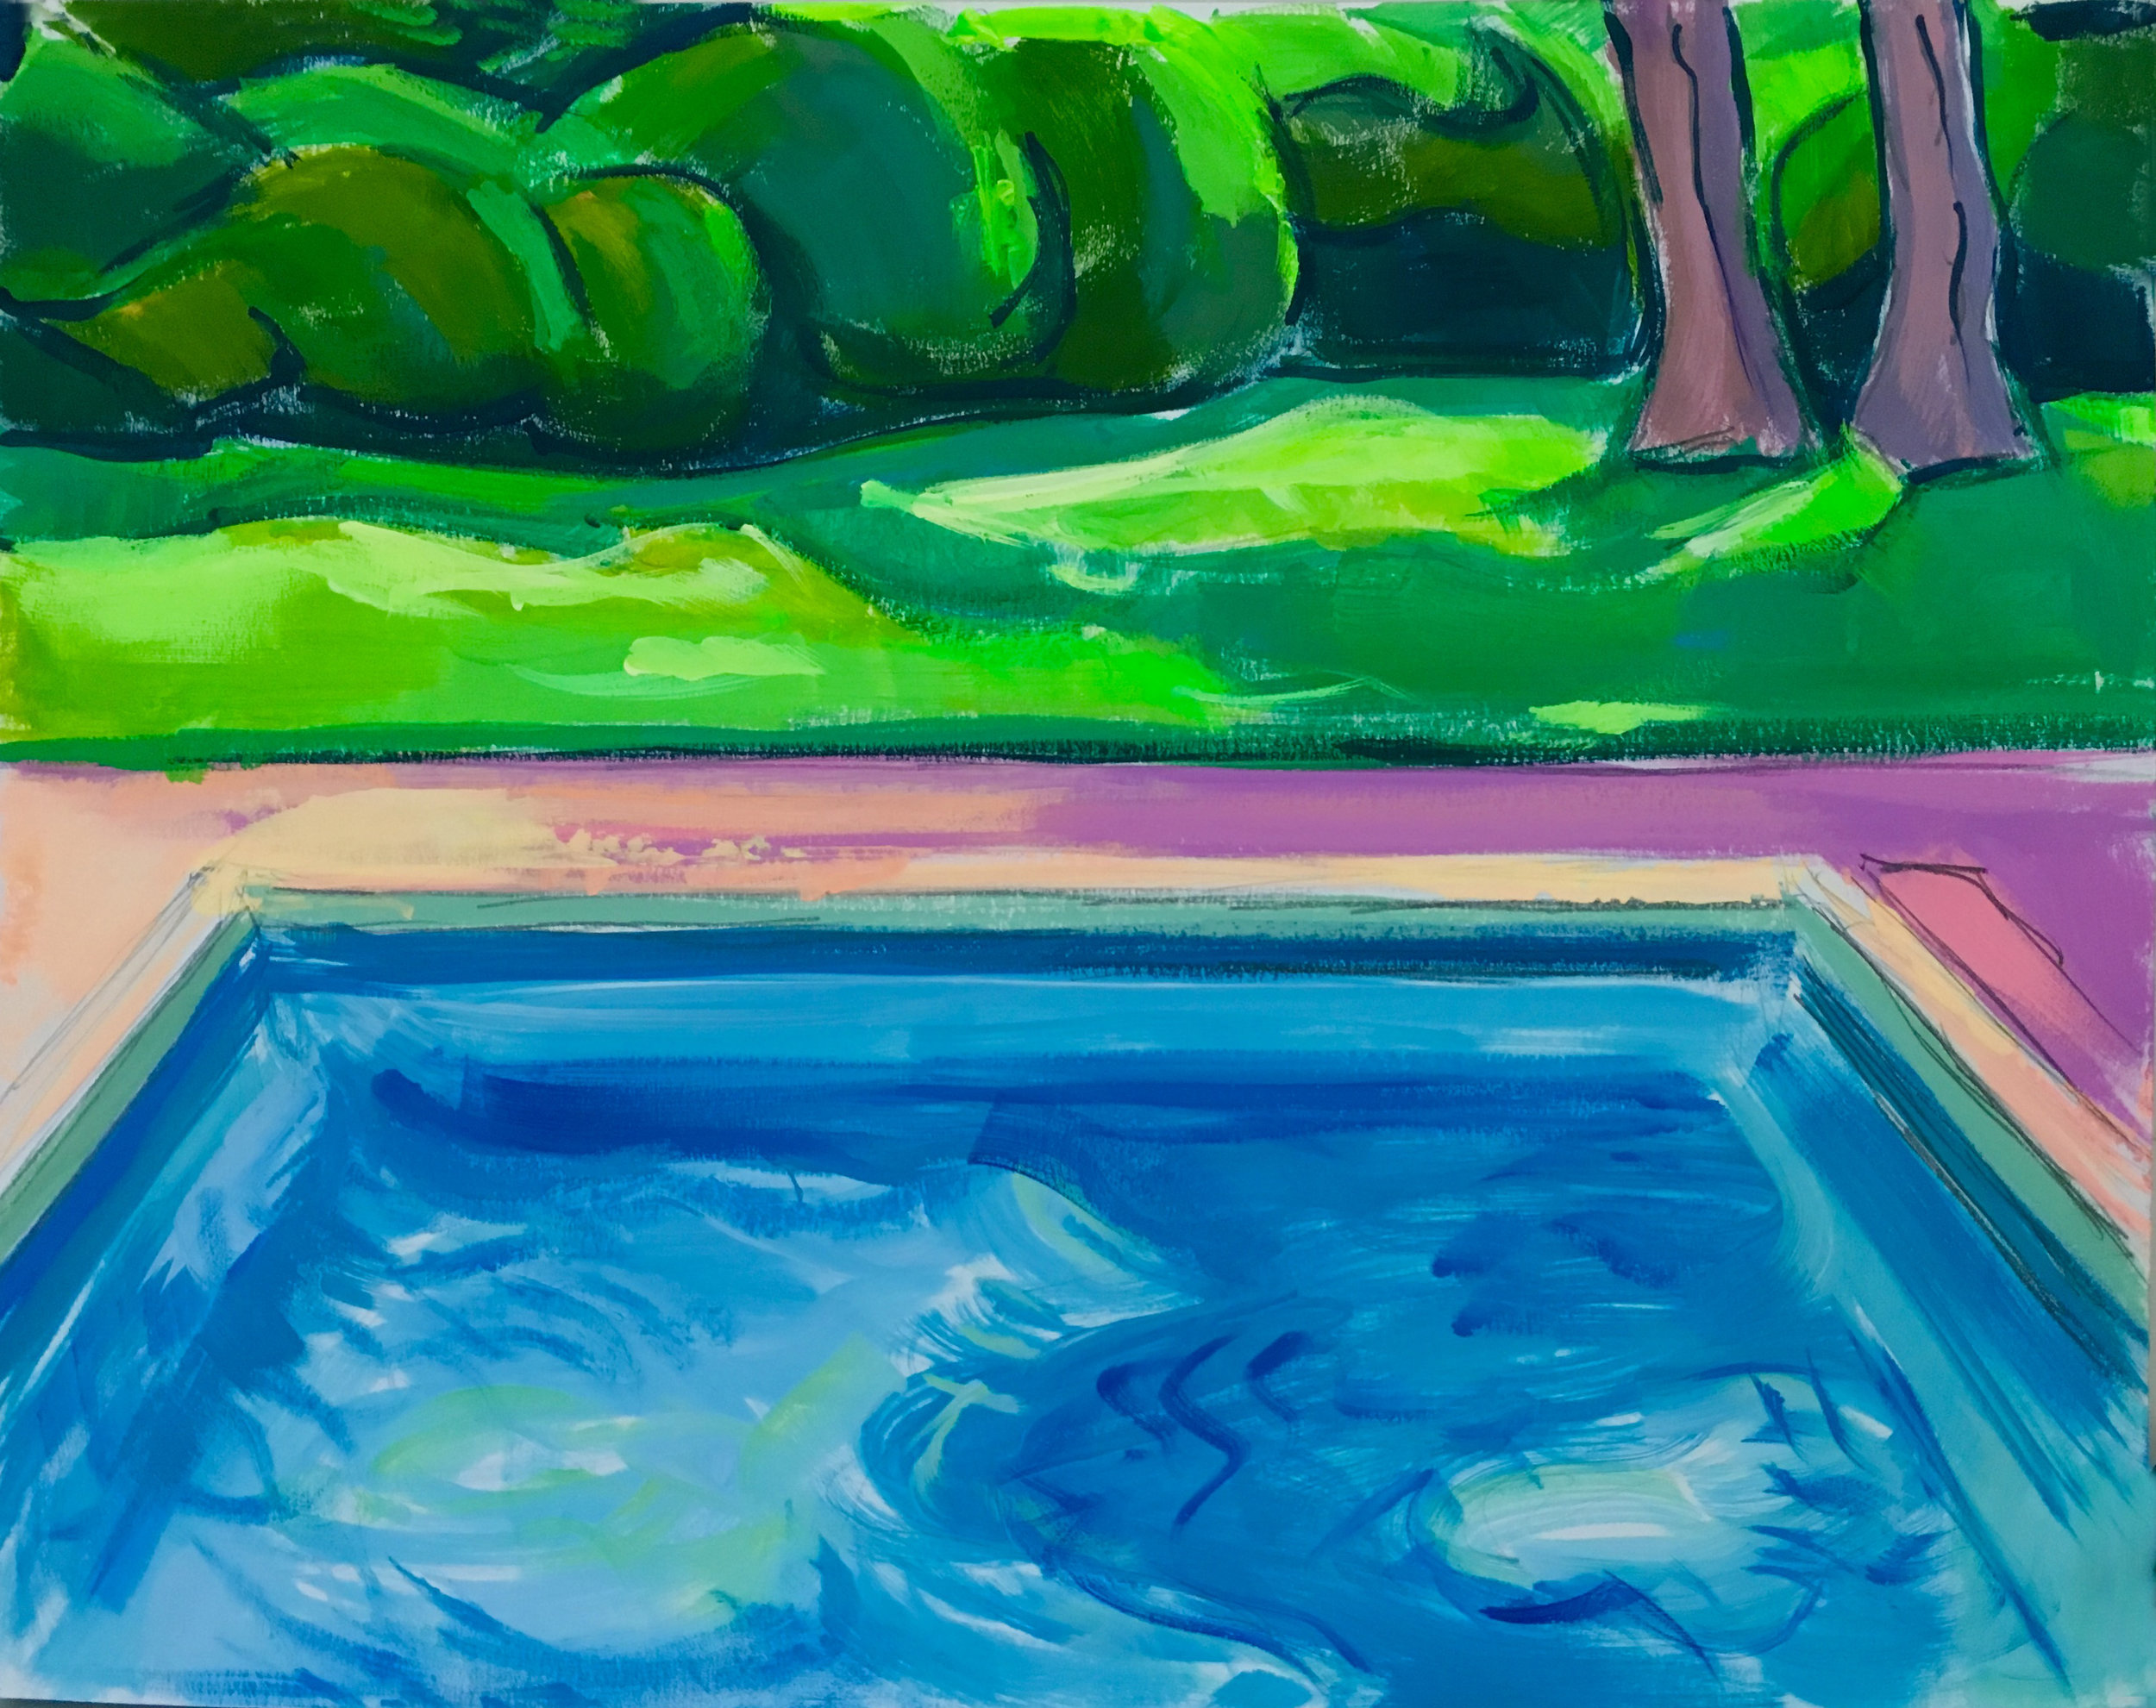    Pool Study III,   gouache, 11 x 14 in., 2017   